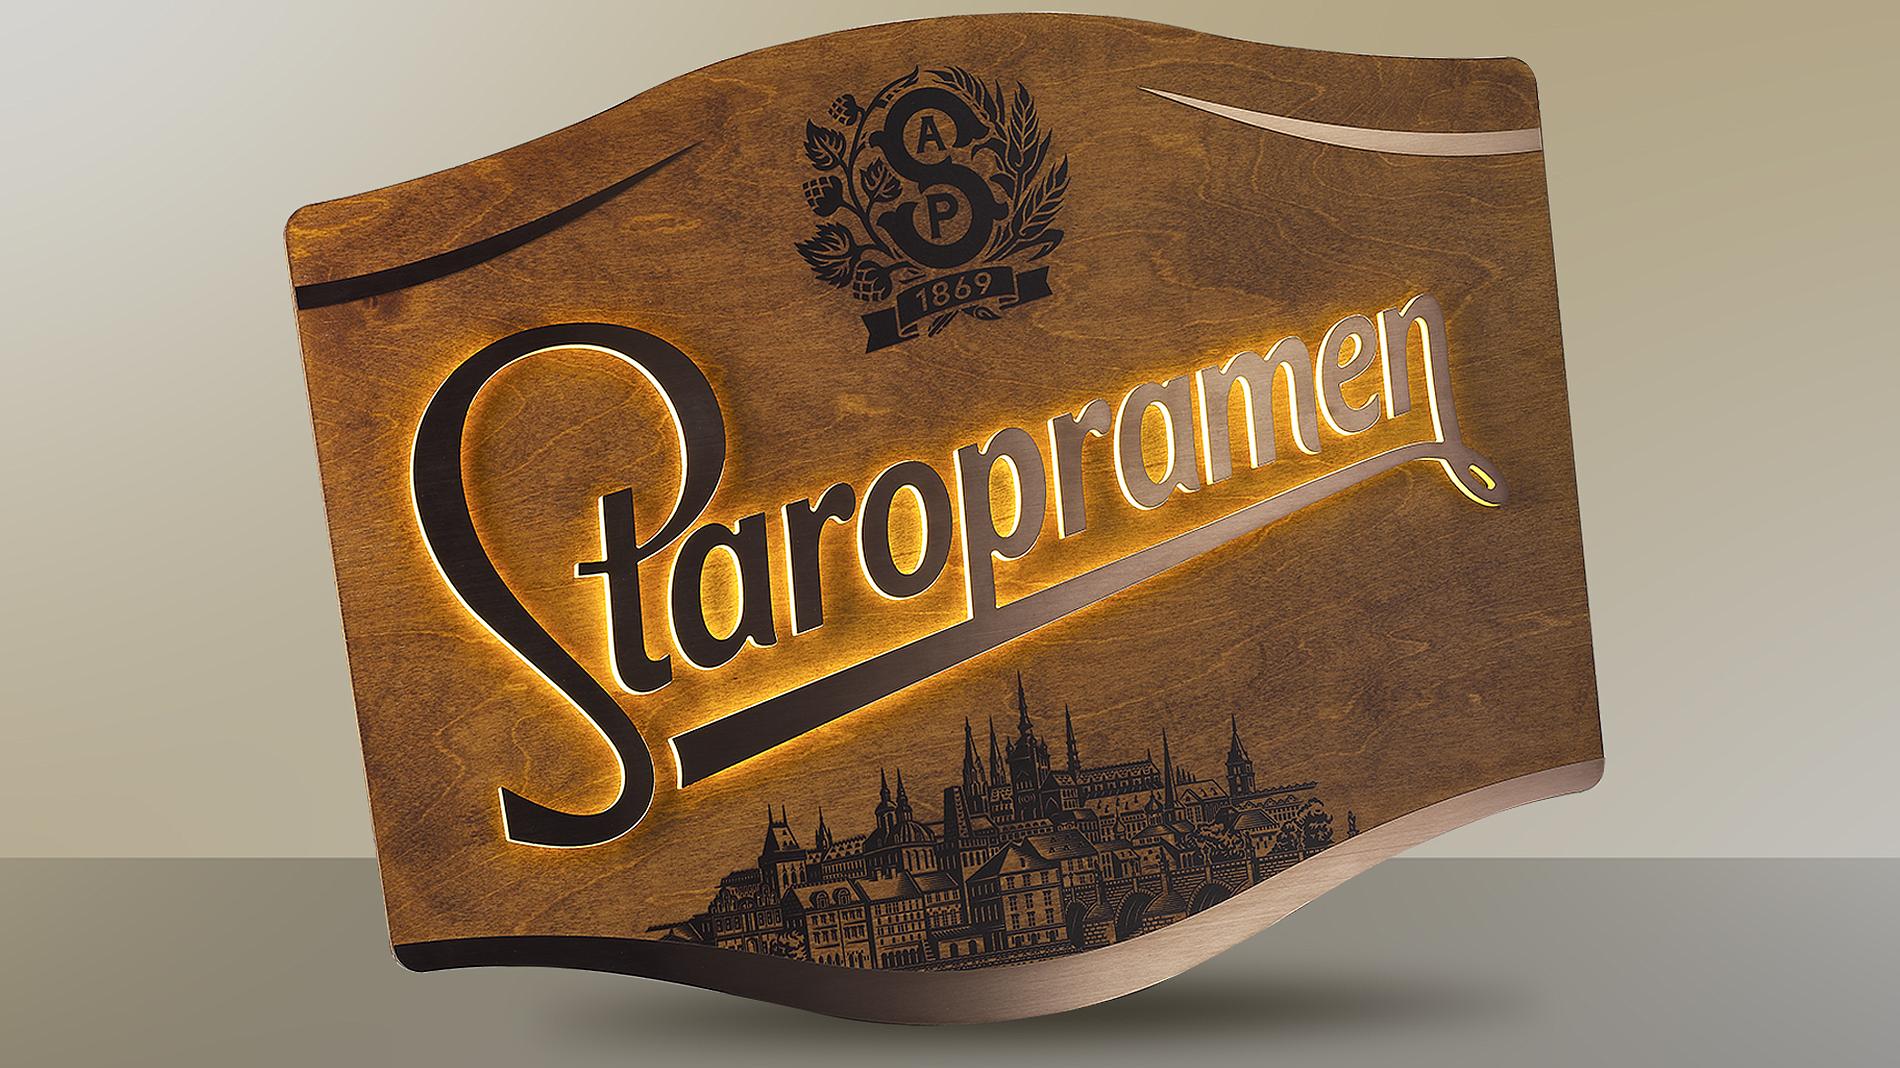 lightbox Staropramen, POS materials, wood, stainless steel